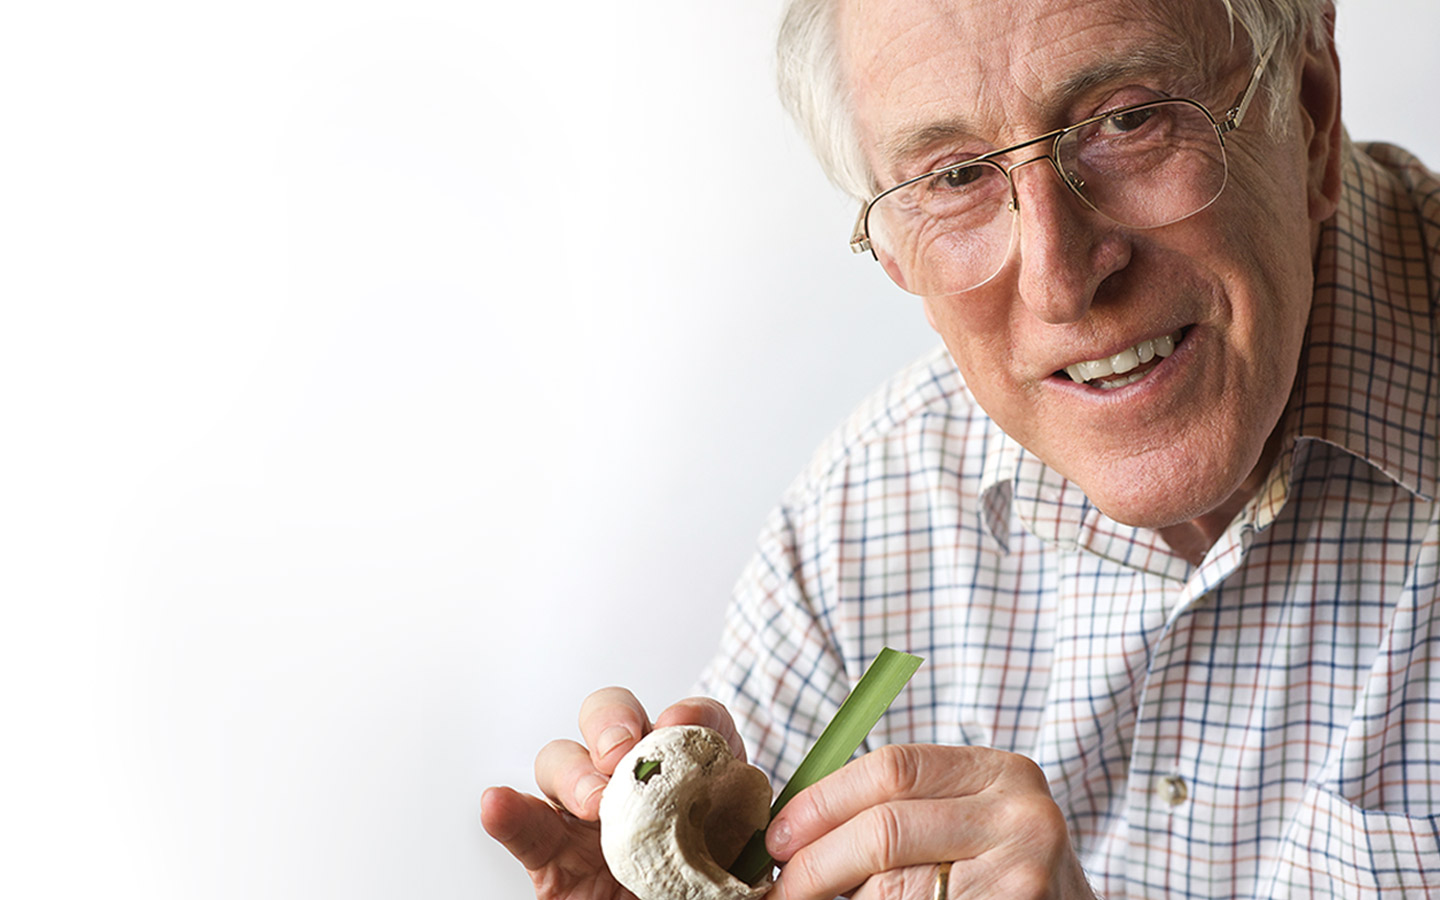 Professor Graeme Clark threads a blade of grass into a seashell